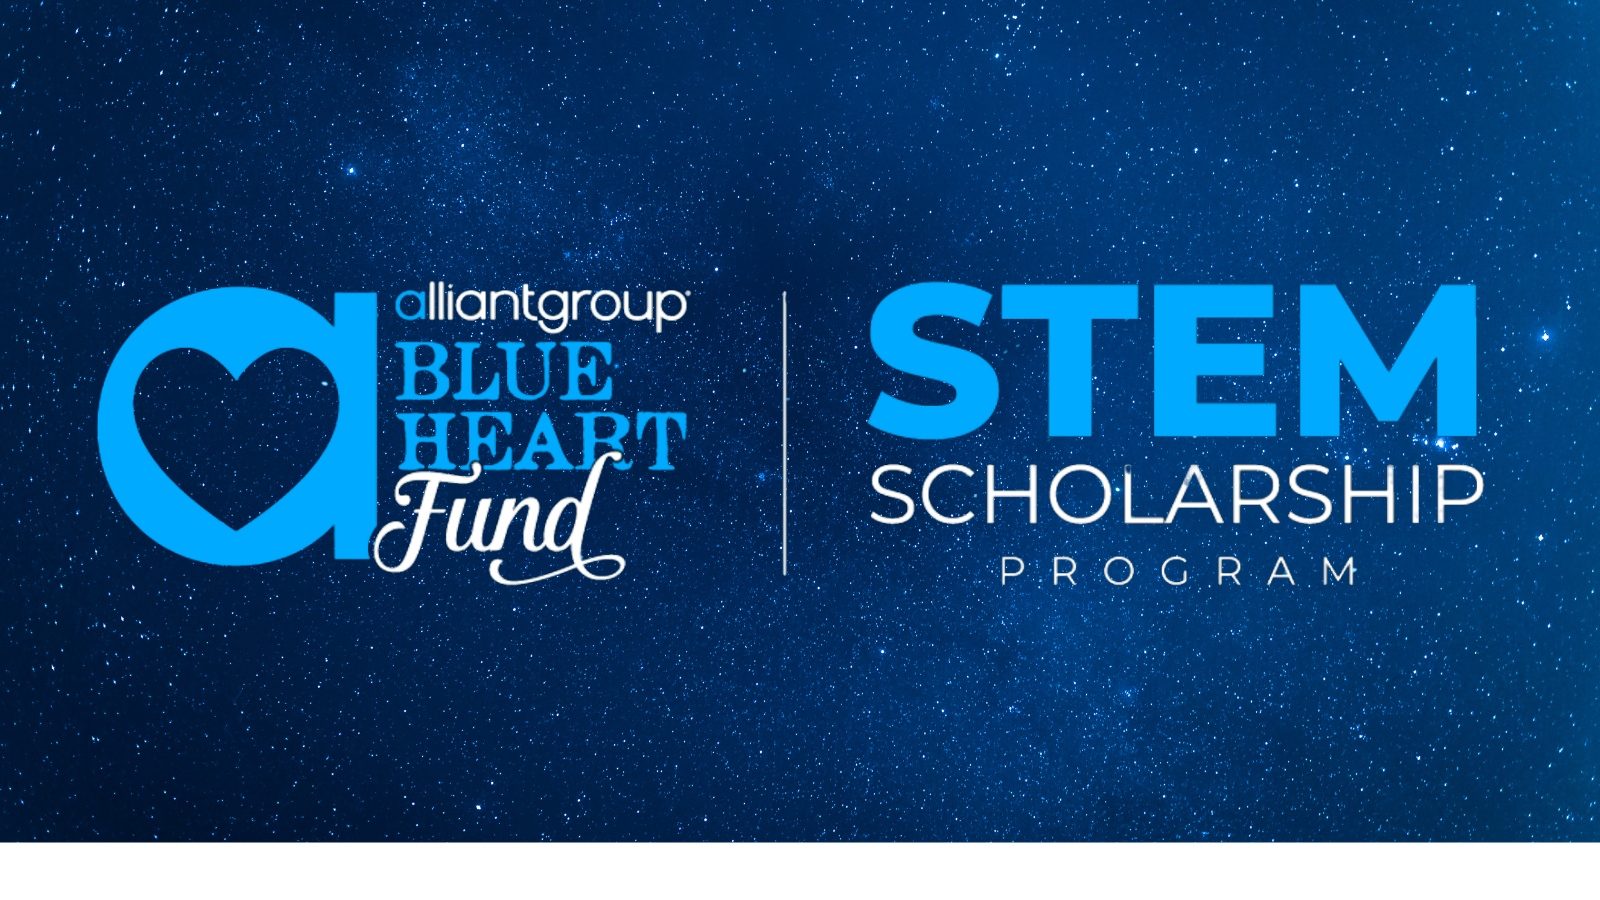 STEM Scholarship Spotlight: Meg May